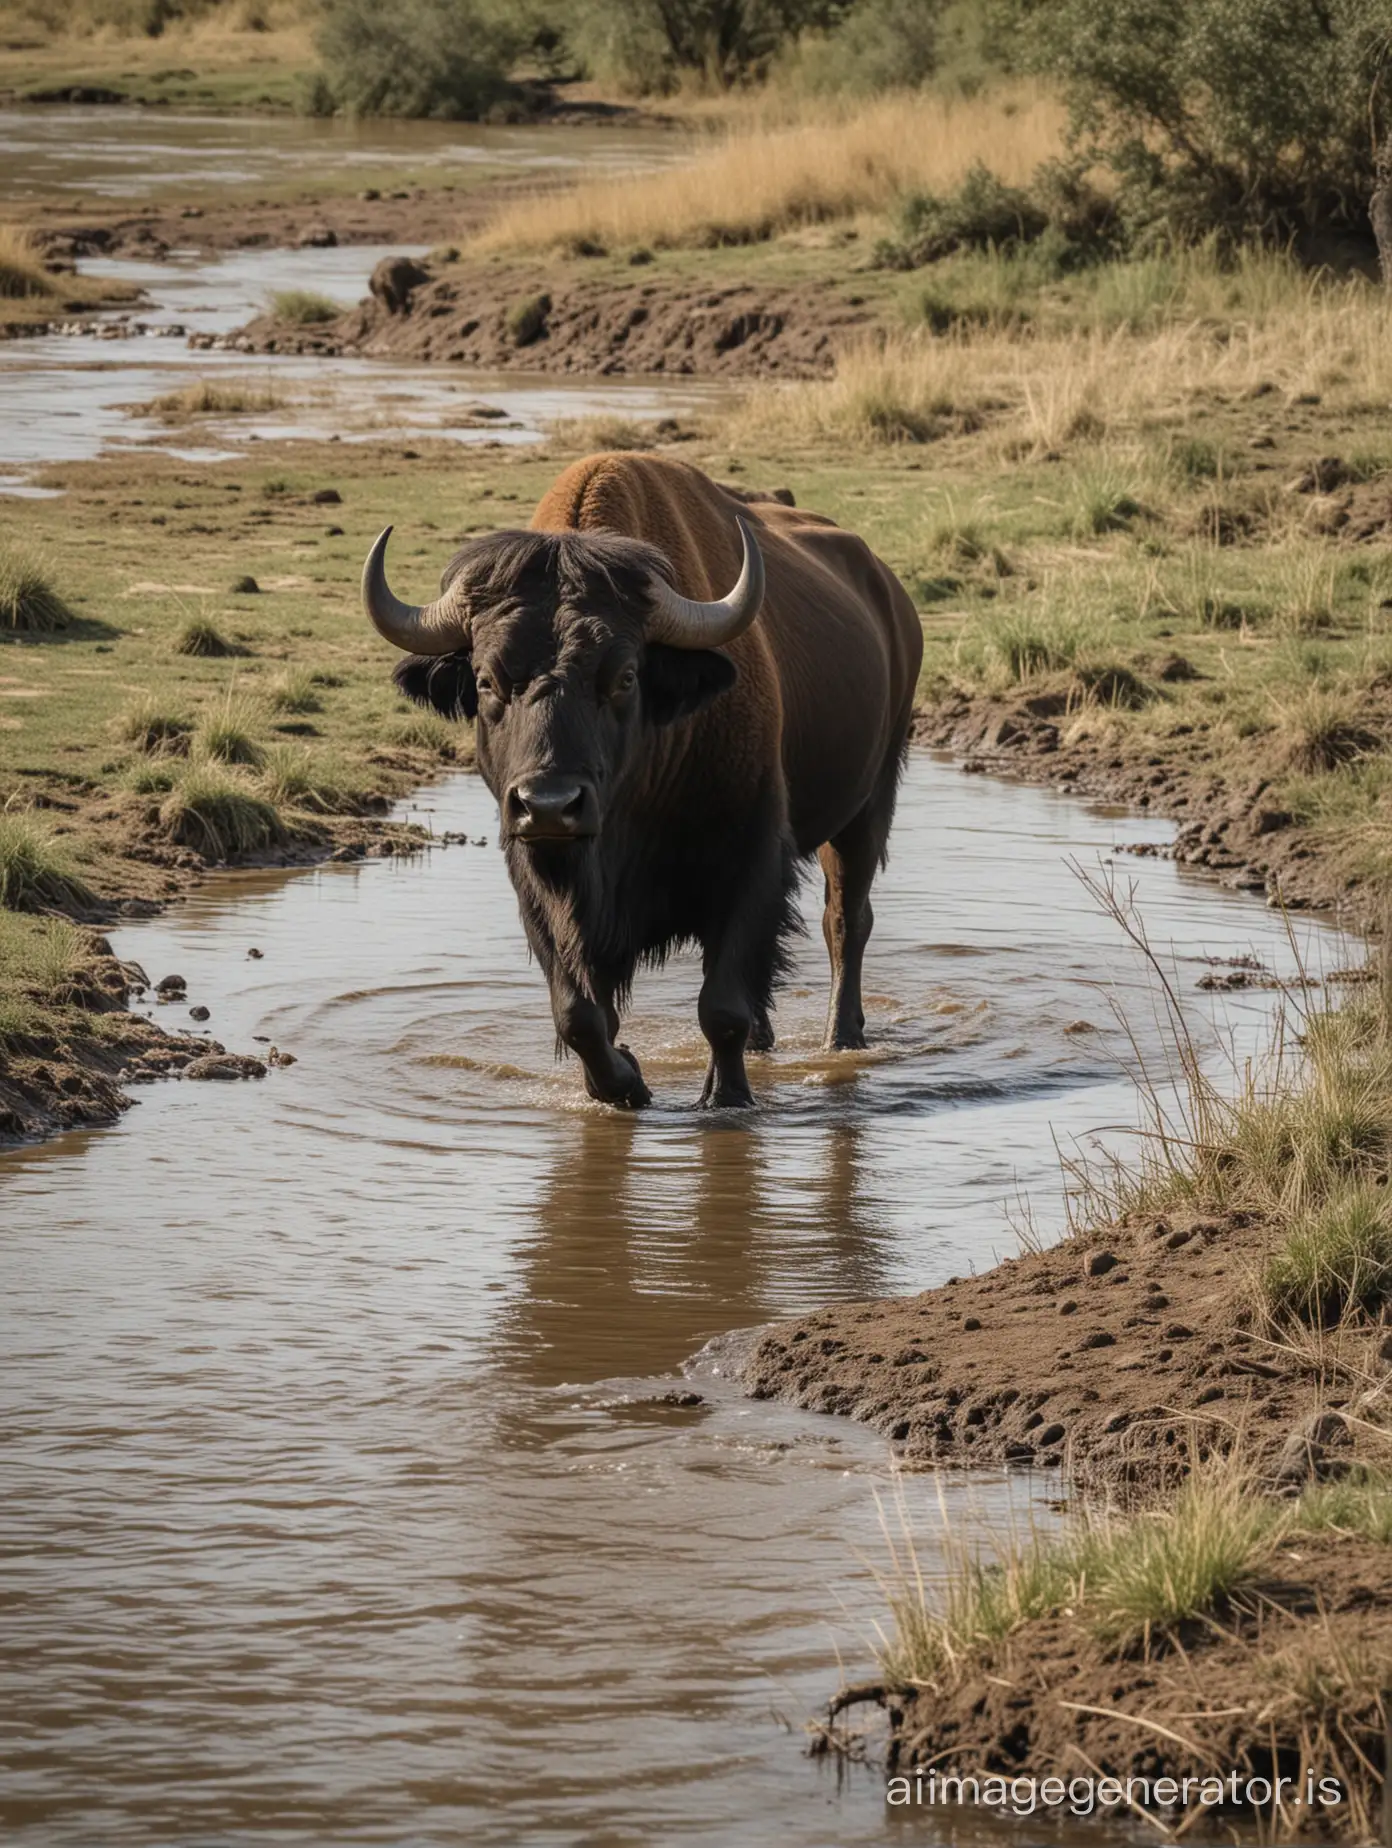 a buffalo waliking in the river